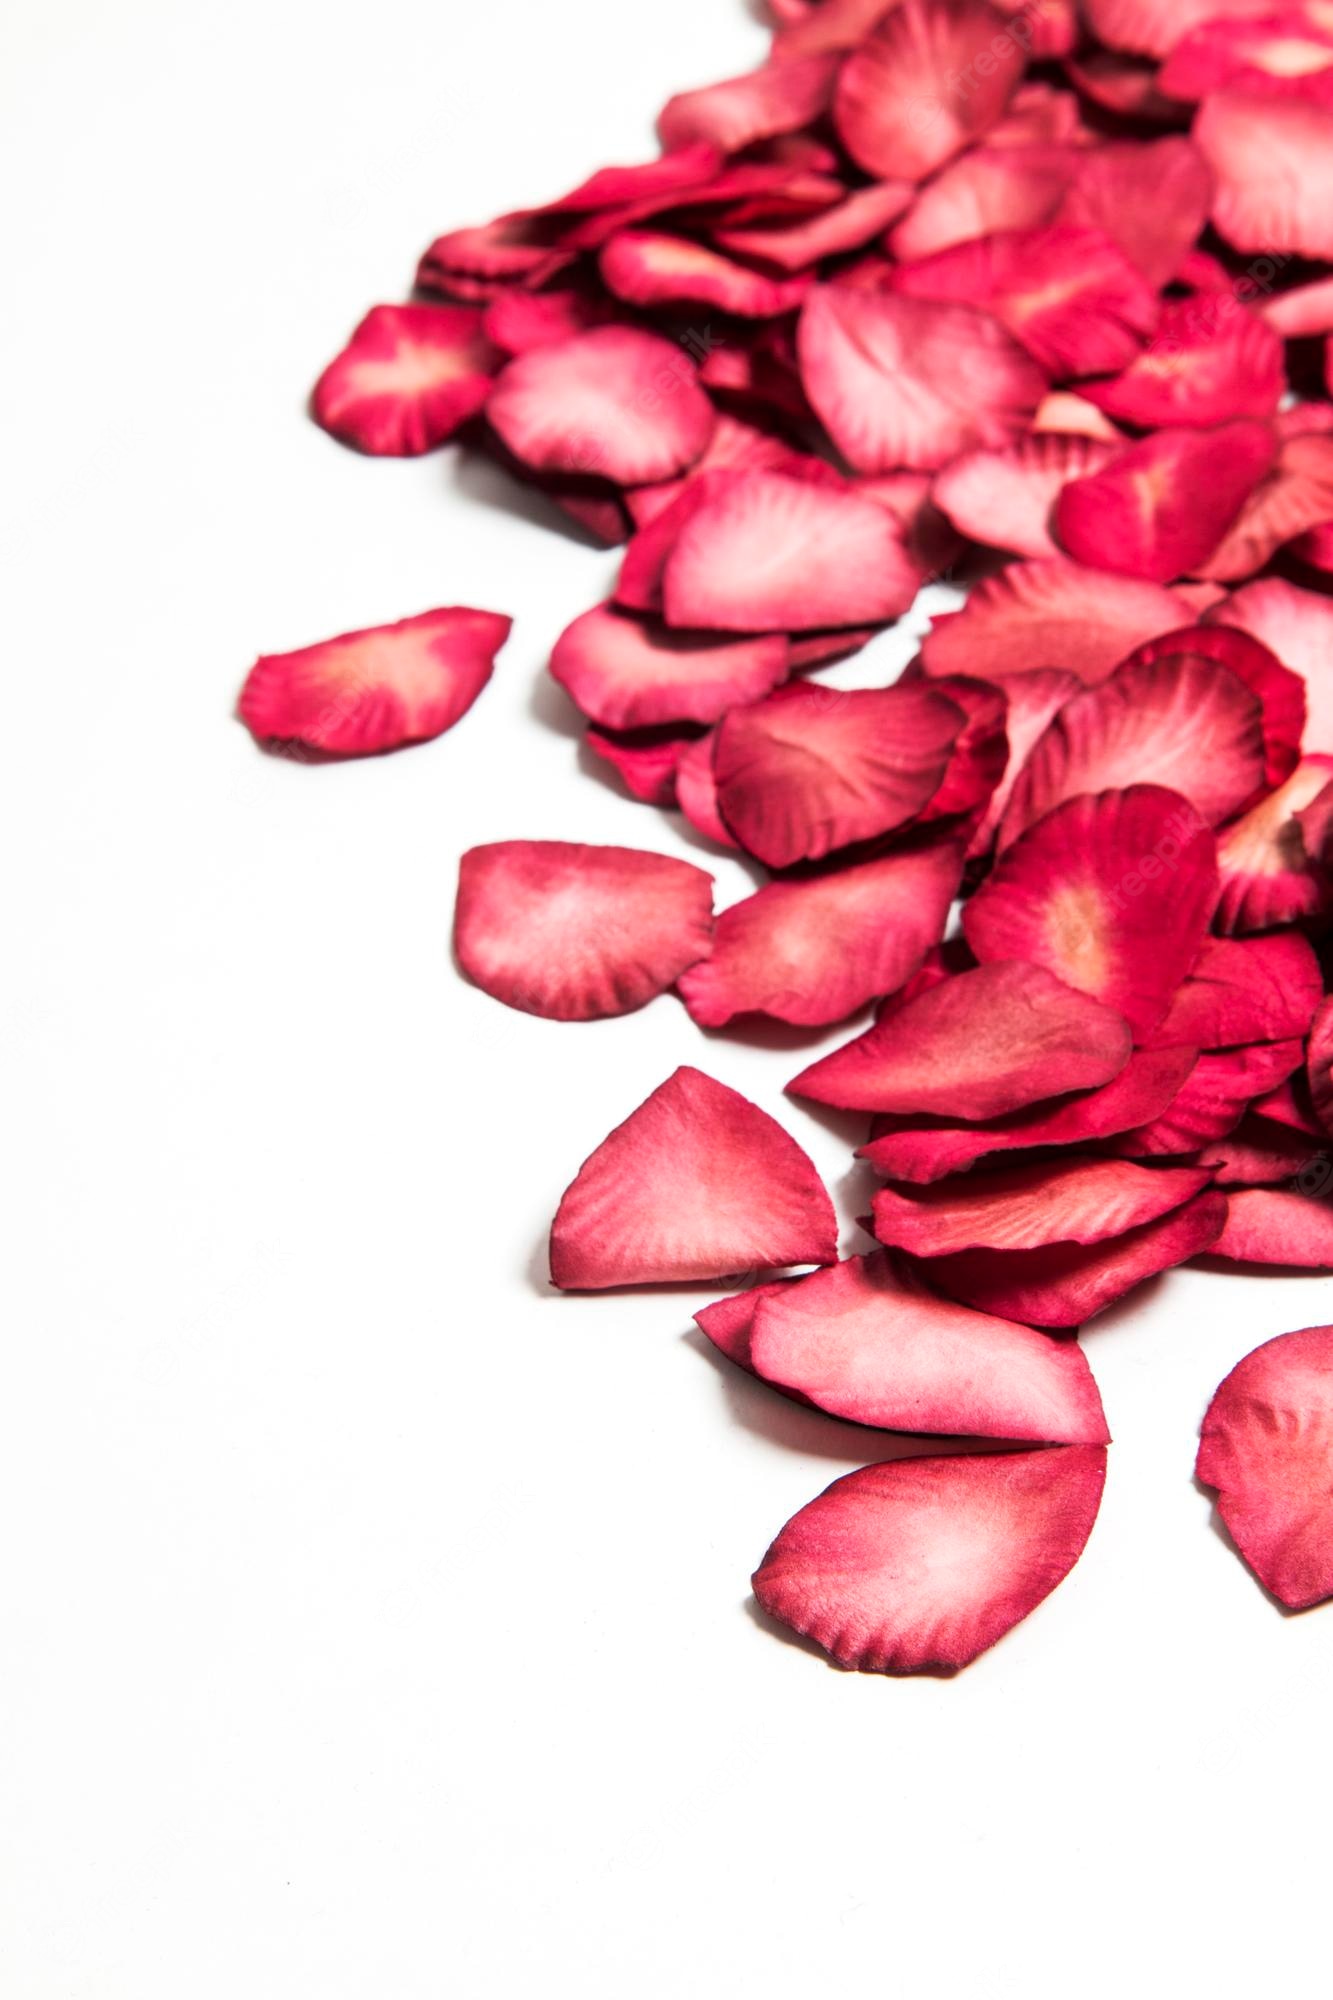 Premium Photo. Red rose petals on a plain white background romantic valentines